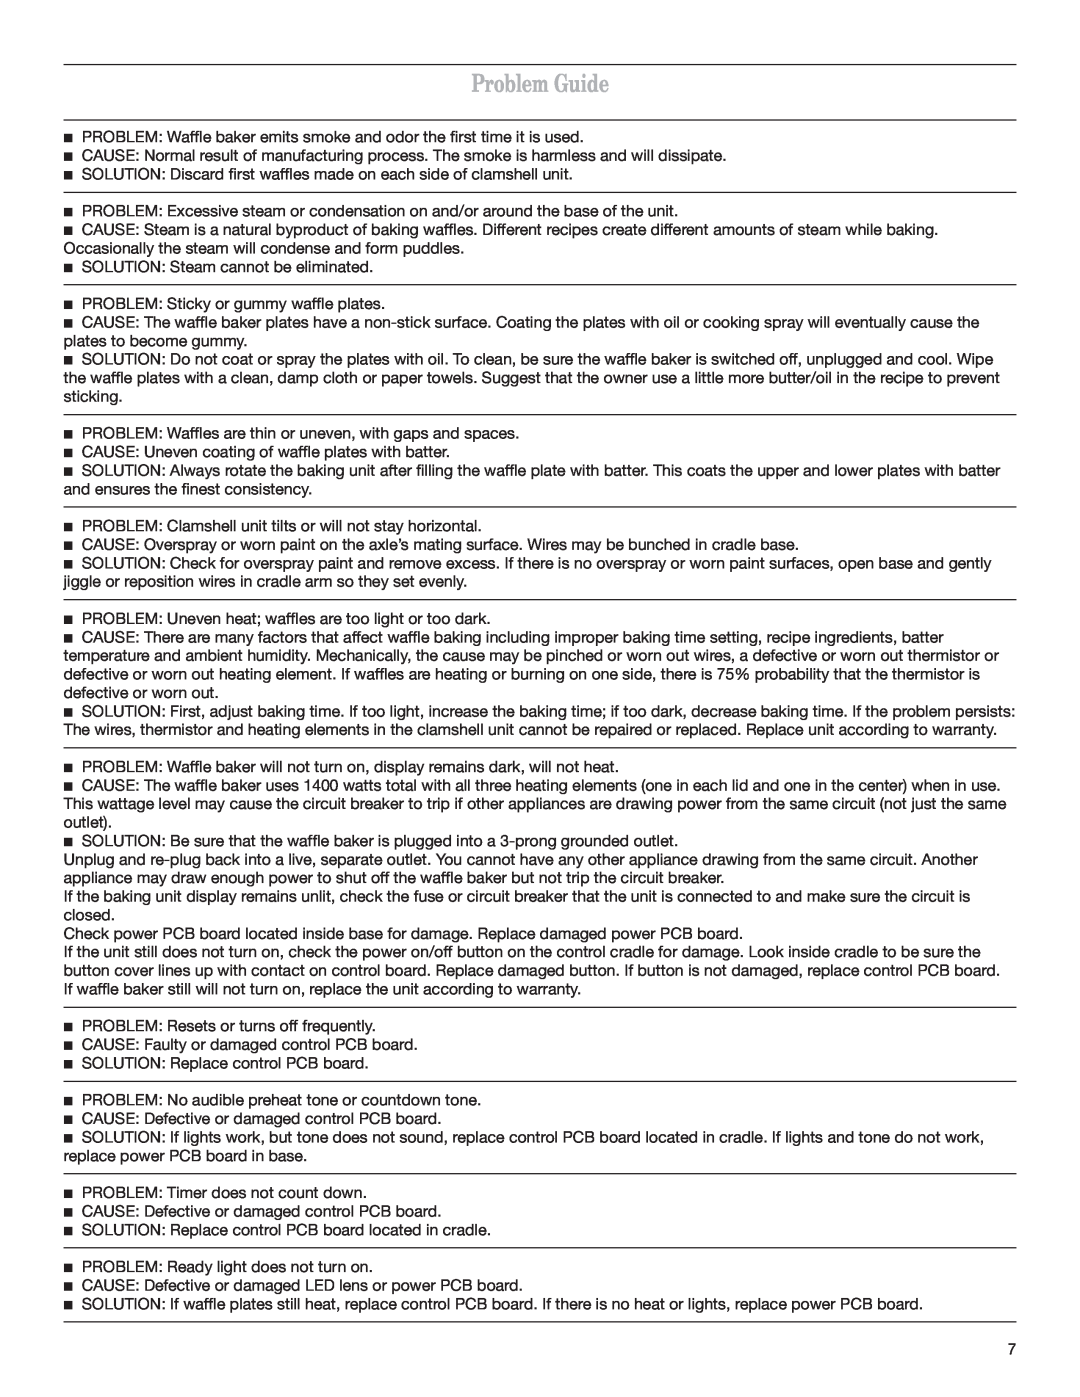 KitchenAid KPWB100 service manual Problem Guide 